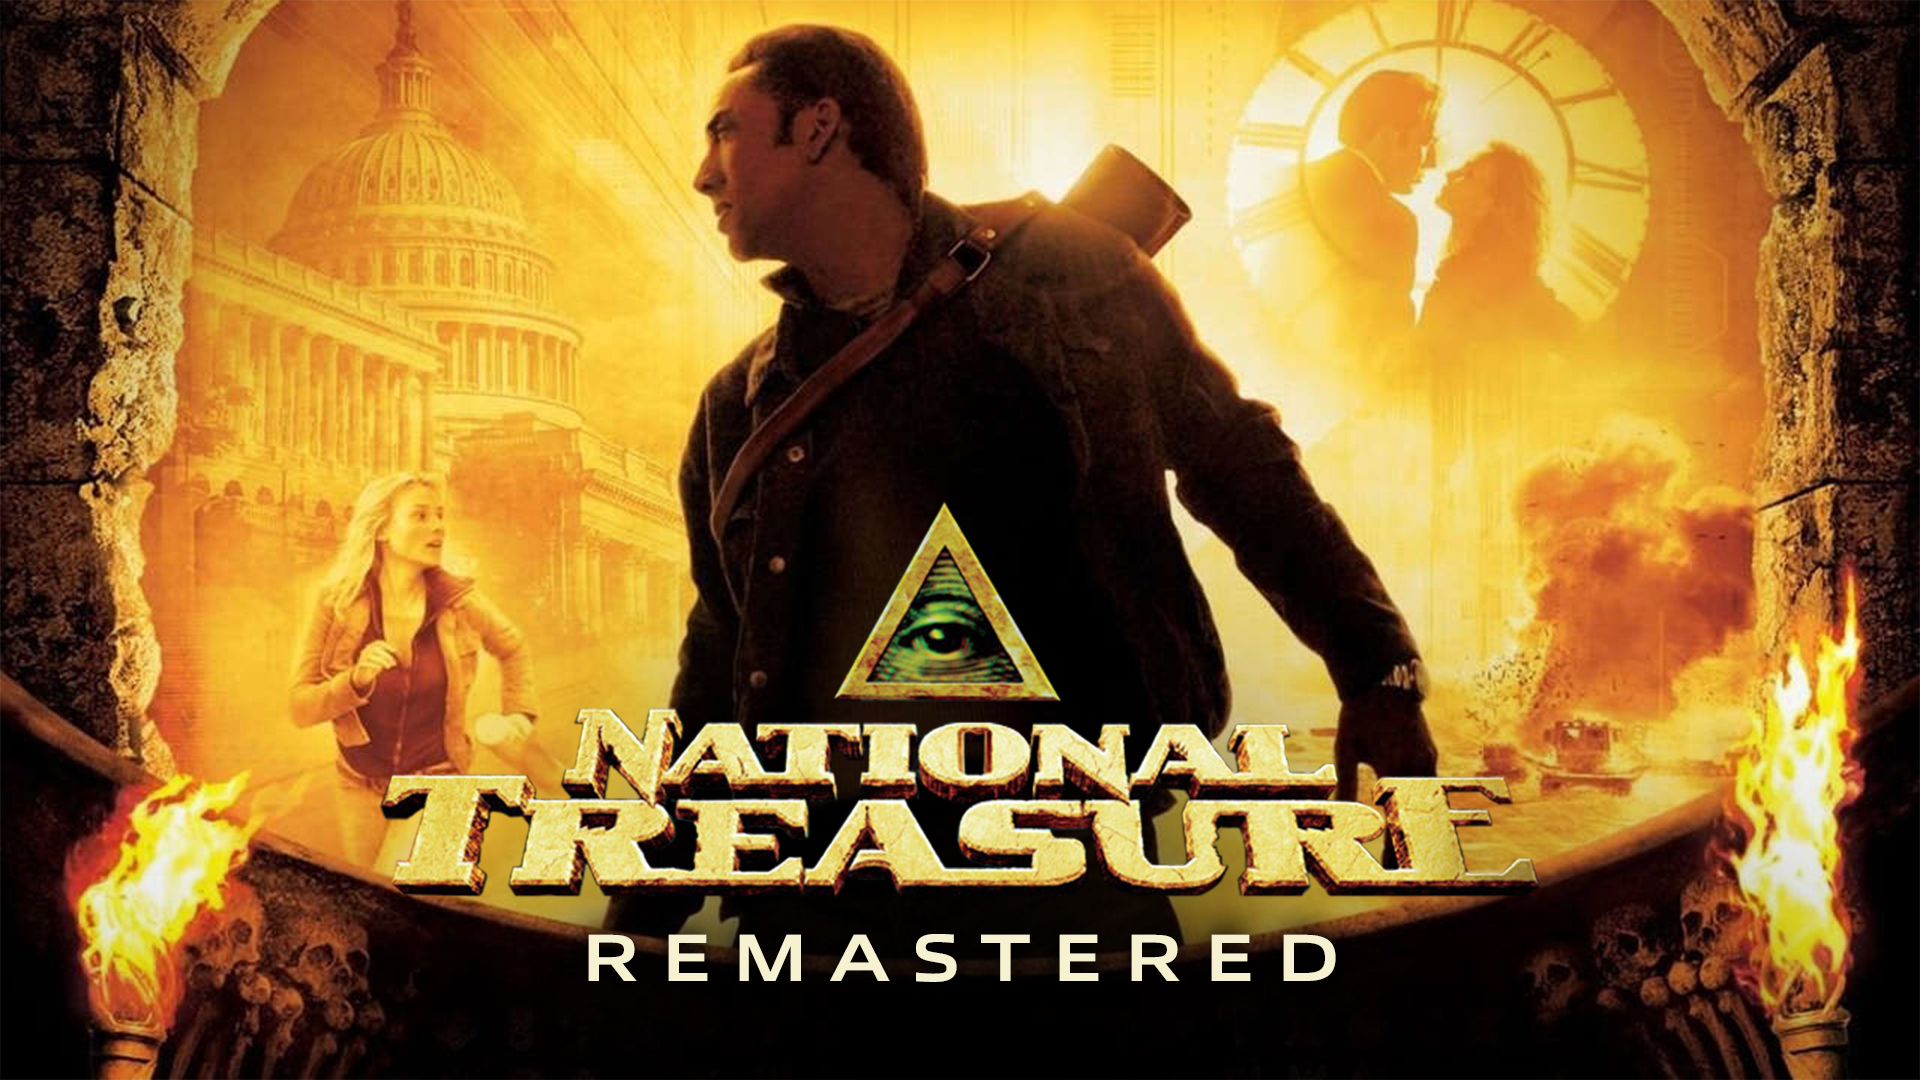 "National Treasure" Remastered